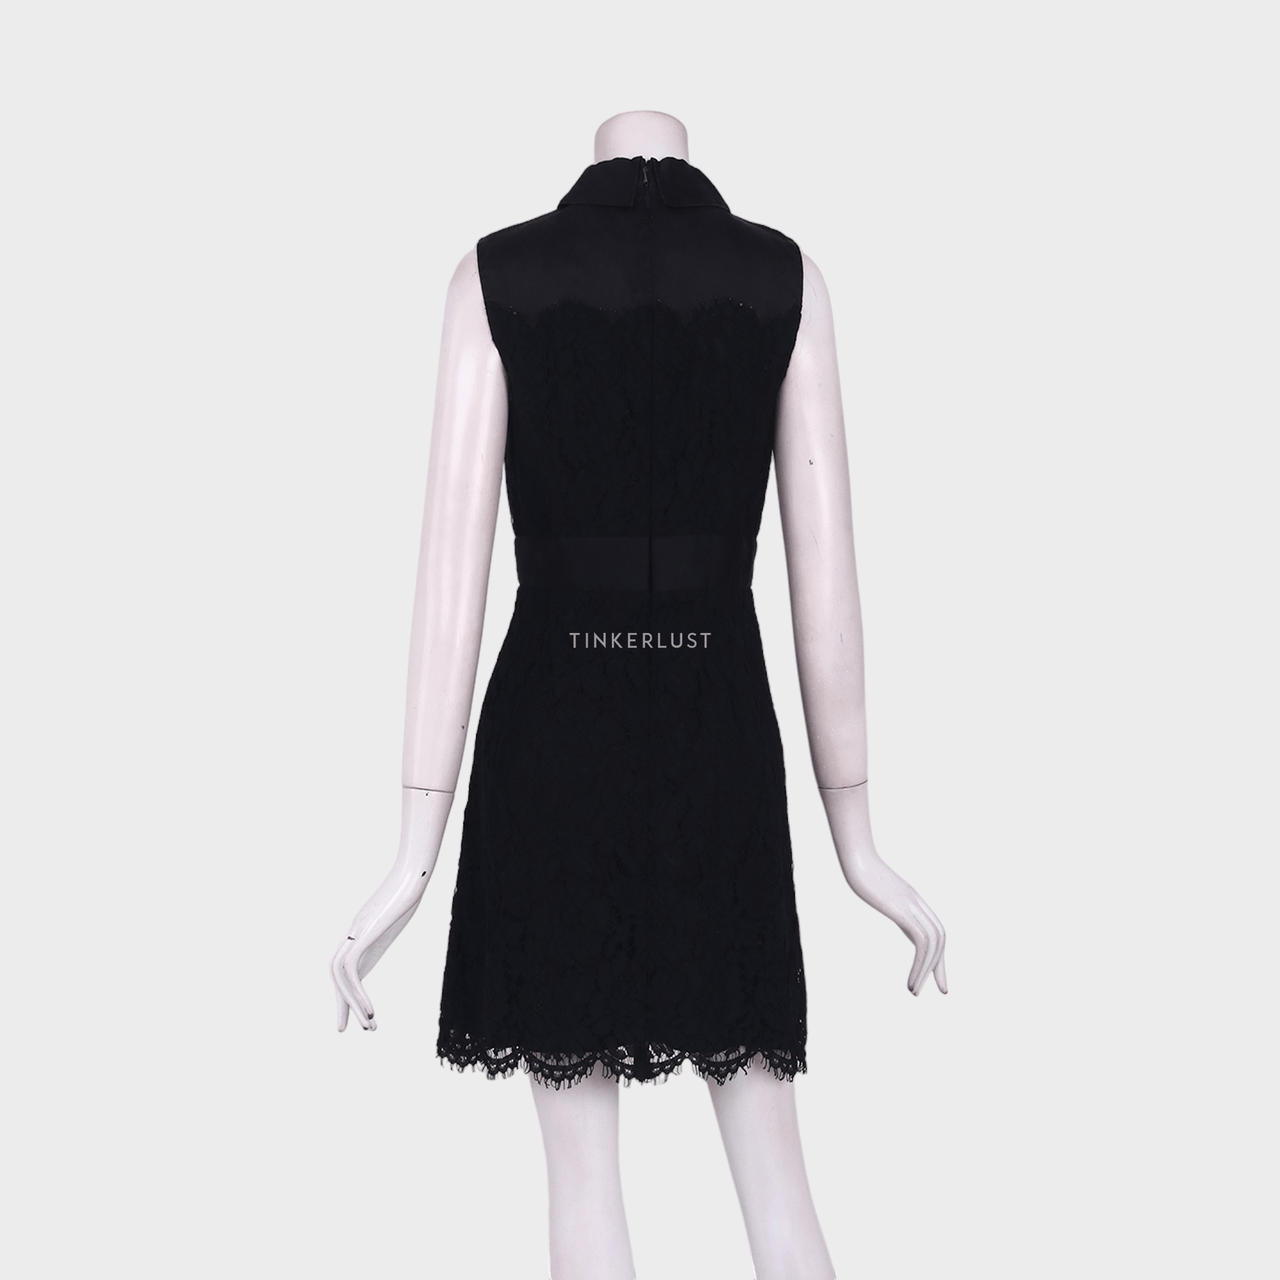 Kate Spade New York Black Lace A Line Dress